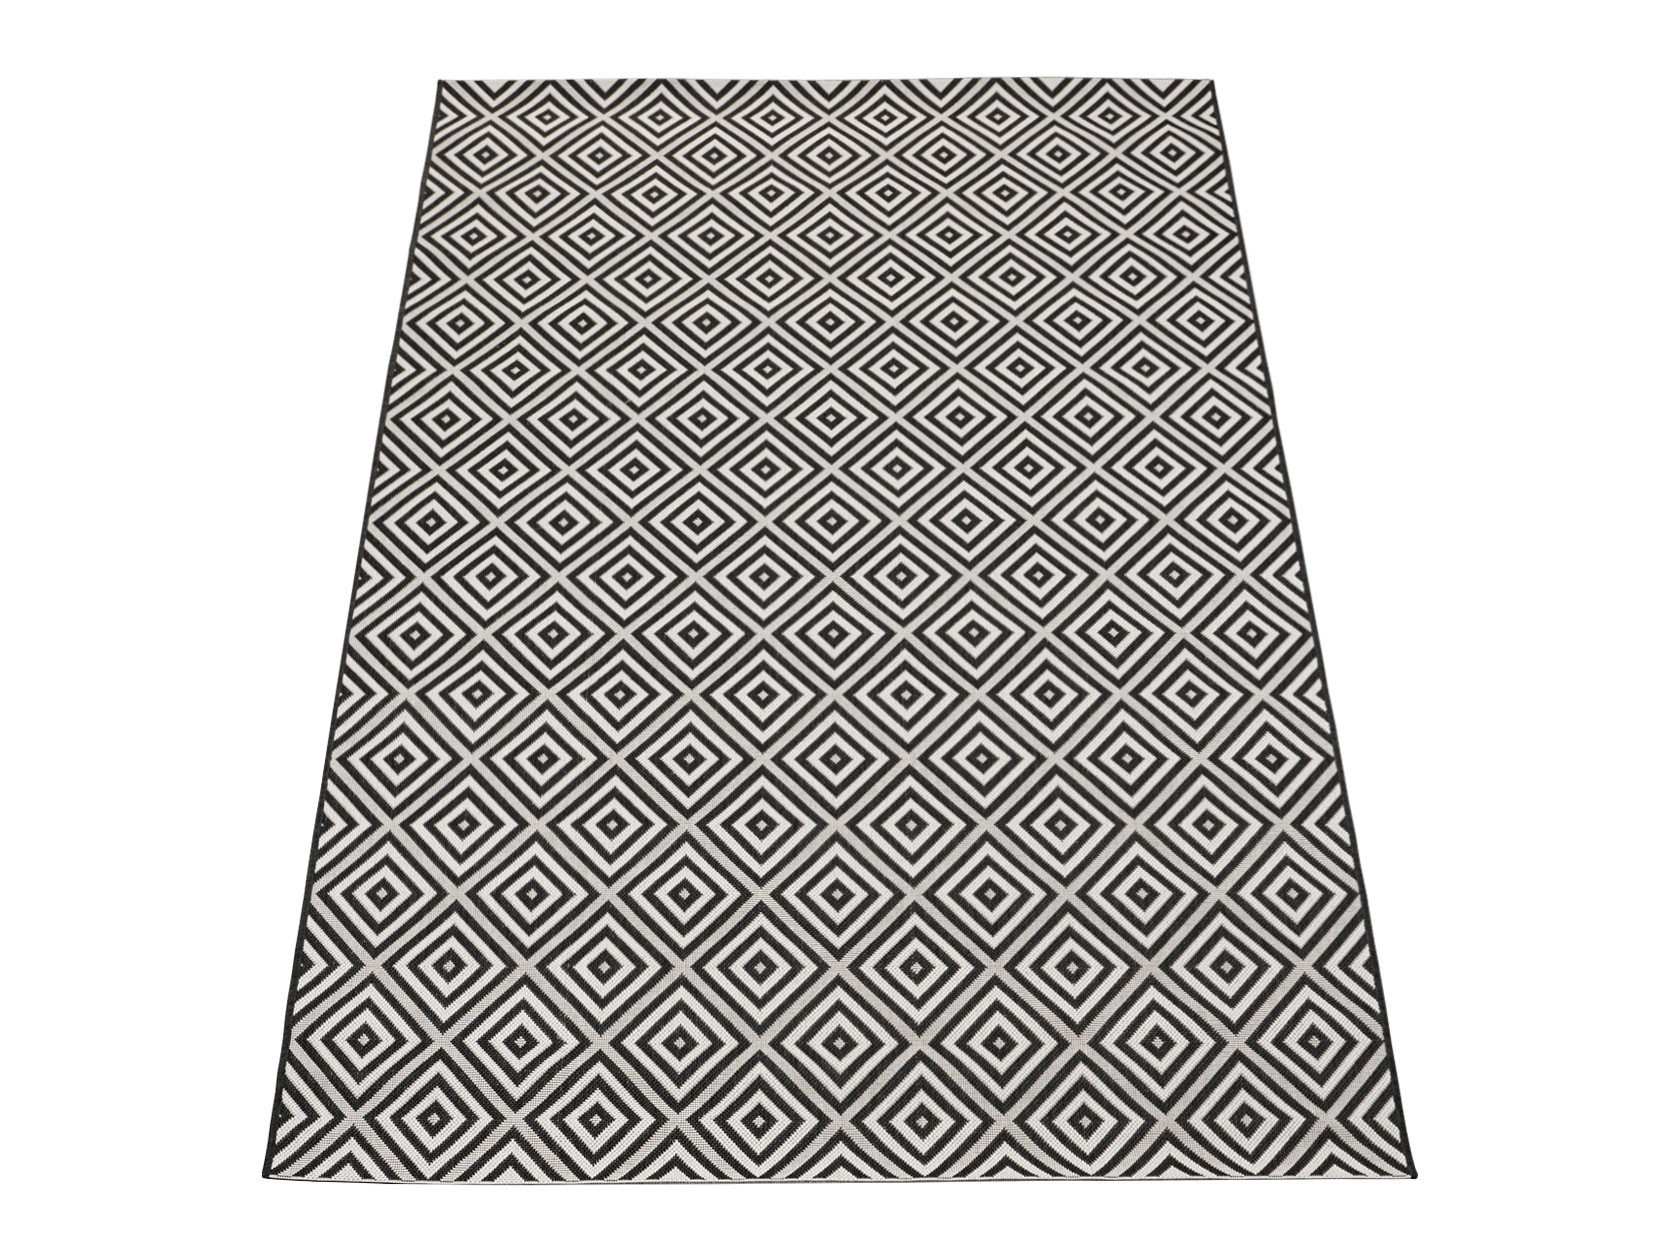 Ковер  Essenza Rhombus Черный / Белый, 690-48607, 800 х 1500 мм